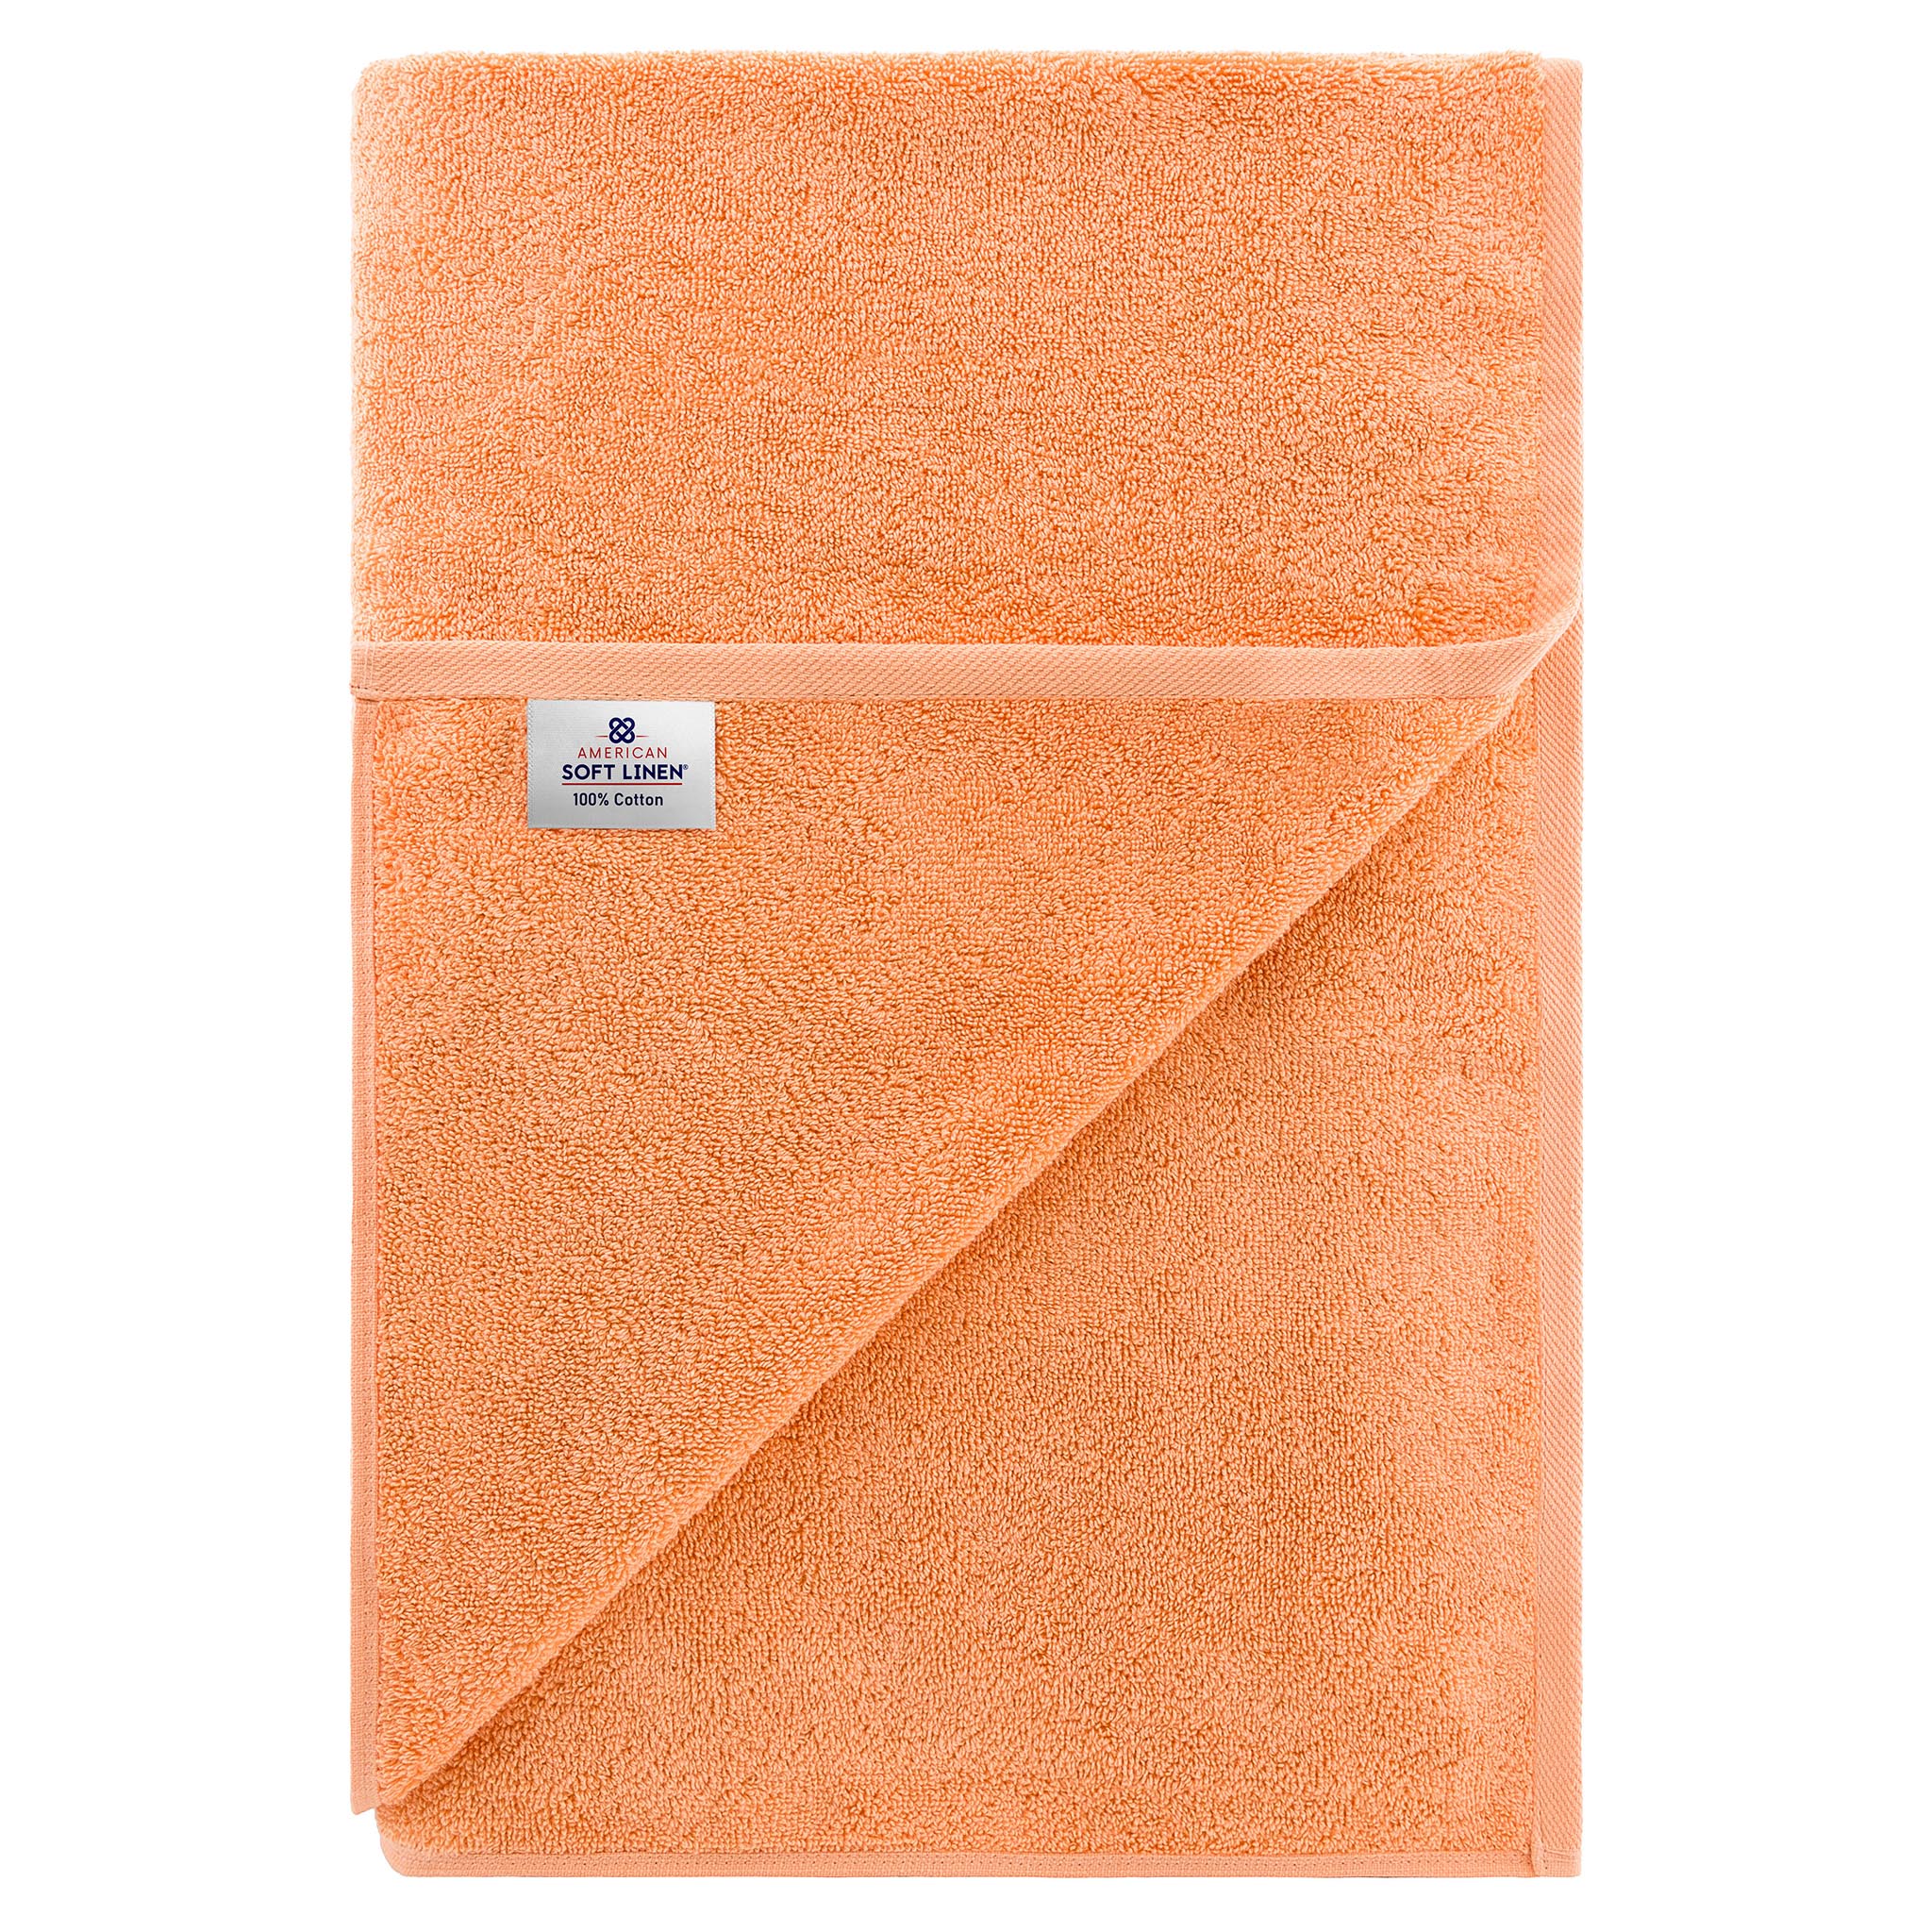 American Soft Linen 100% Ring Spun Cotton 40x80 Inches Oversized Bath Sheets malibu-peach-7